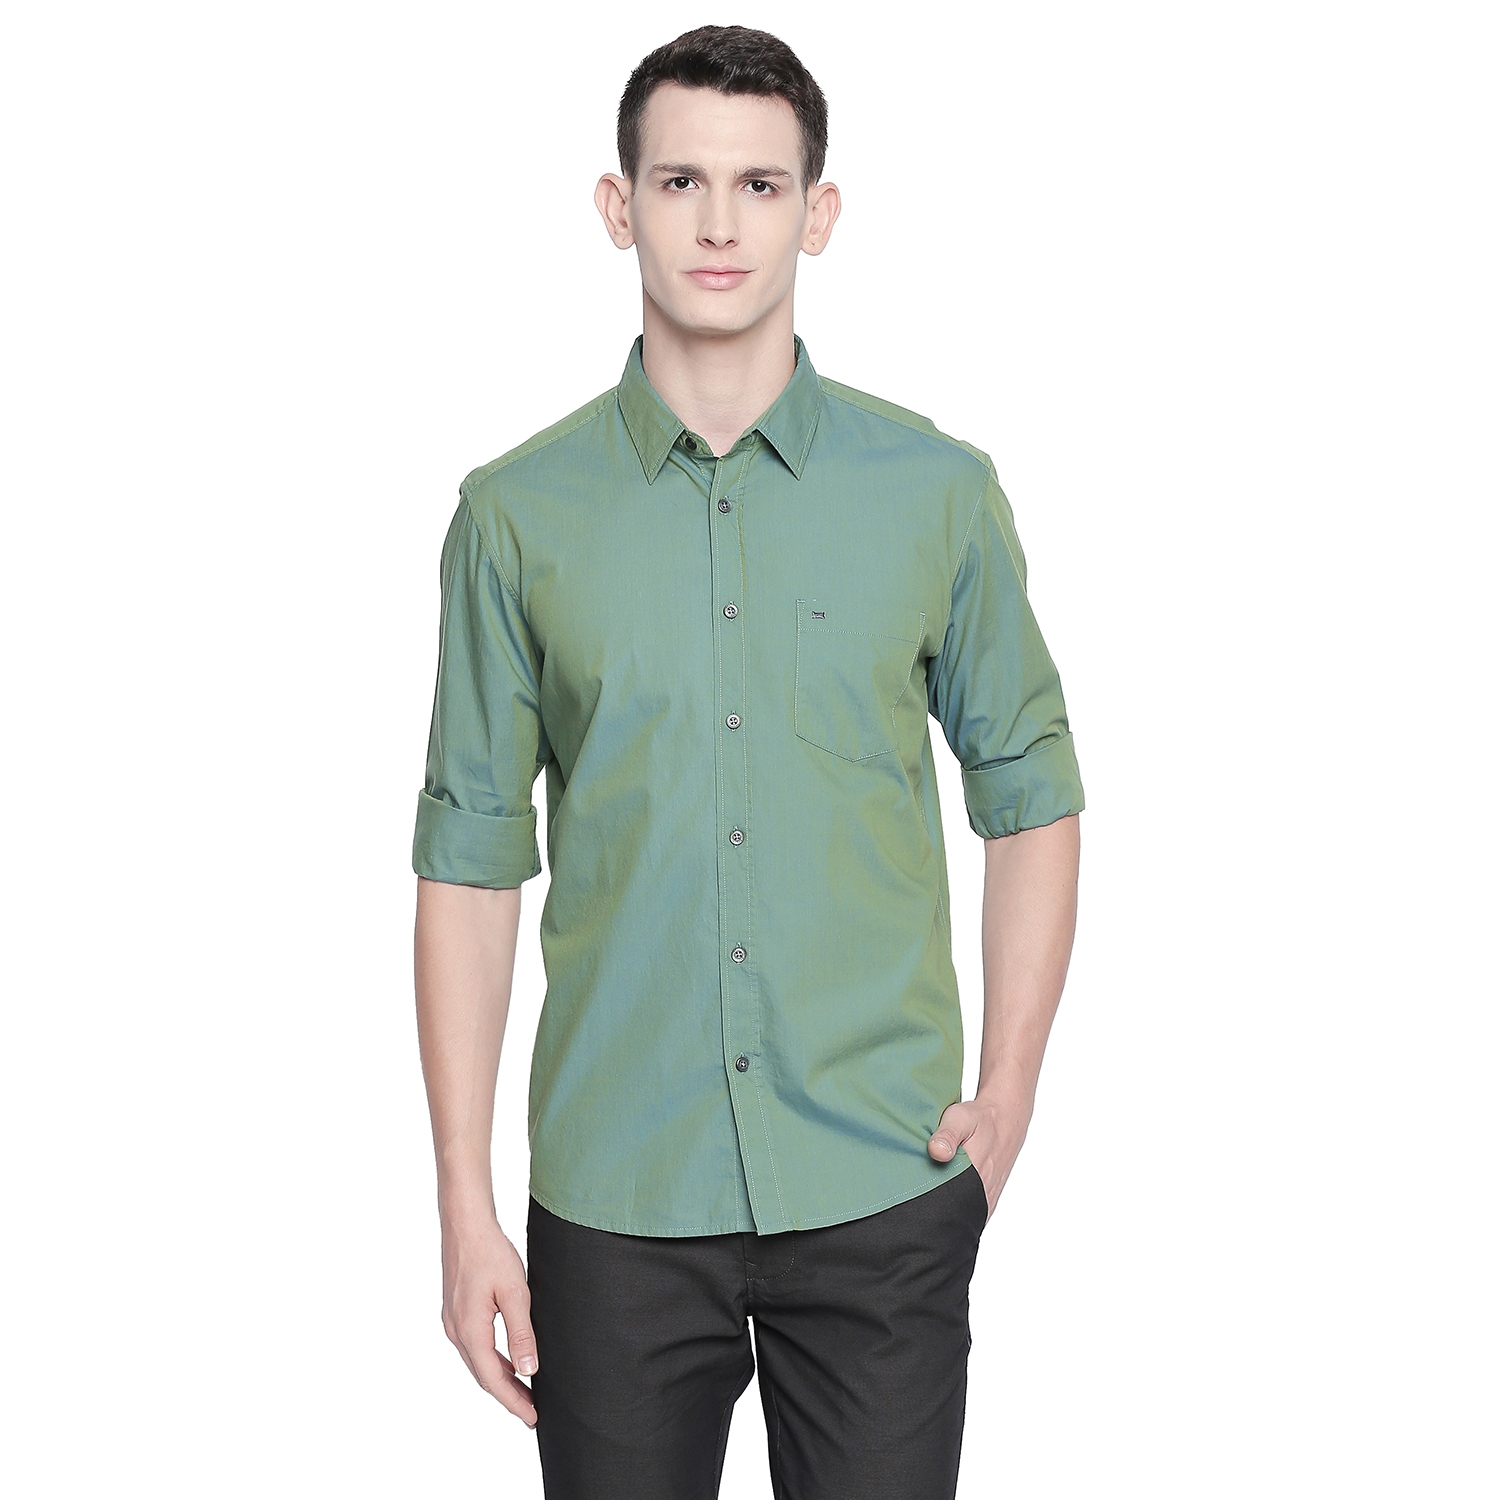 Basics | Basics Slim Fit Frosty Green Chambray Shirt